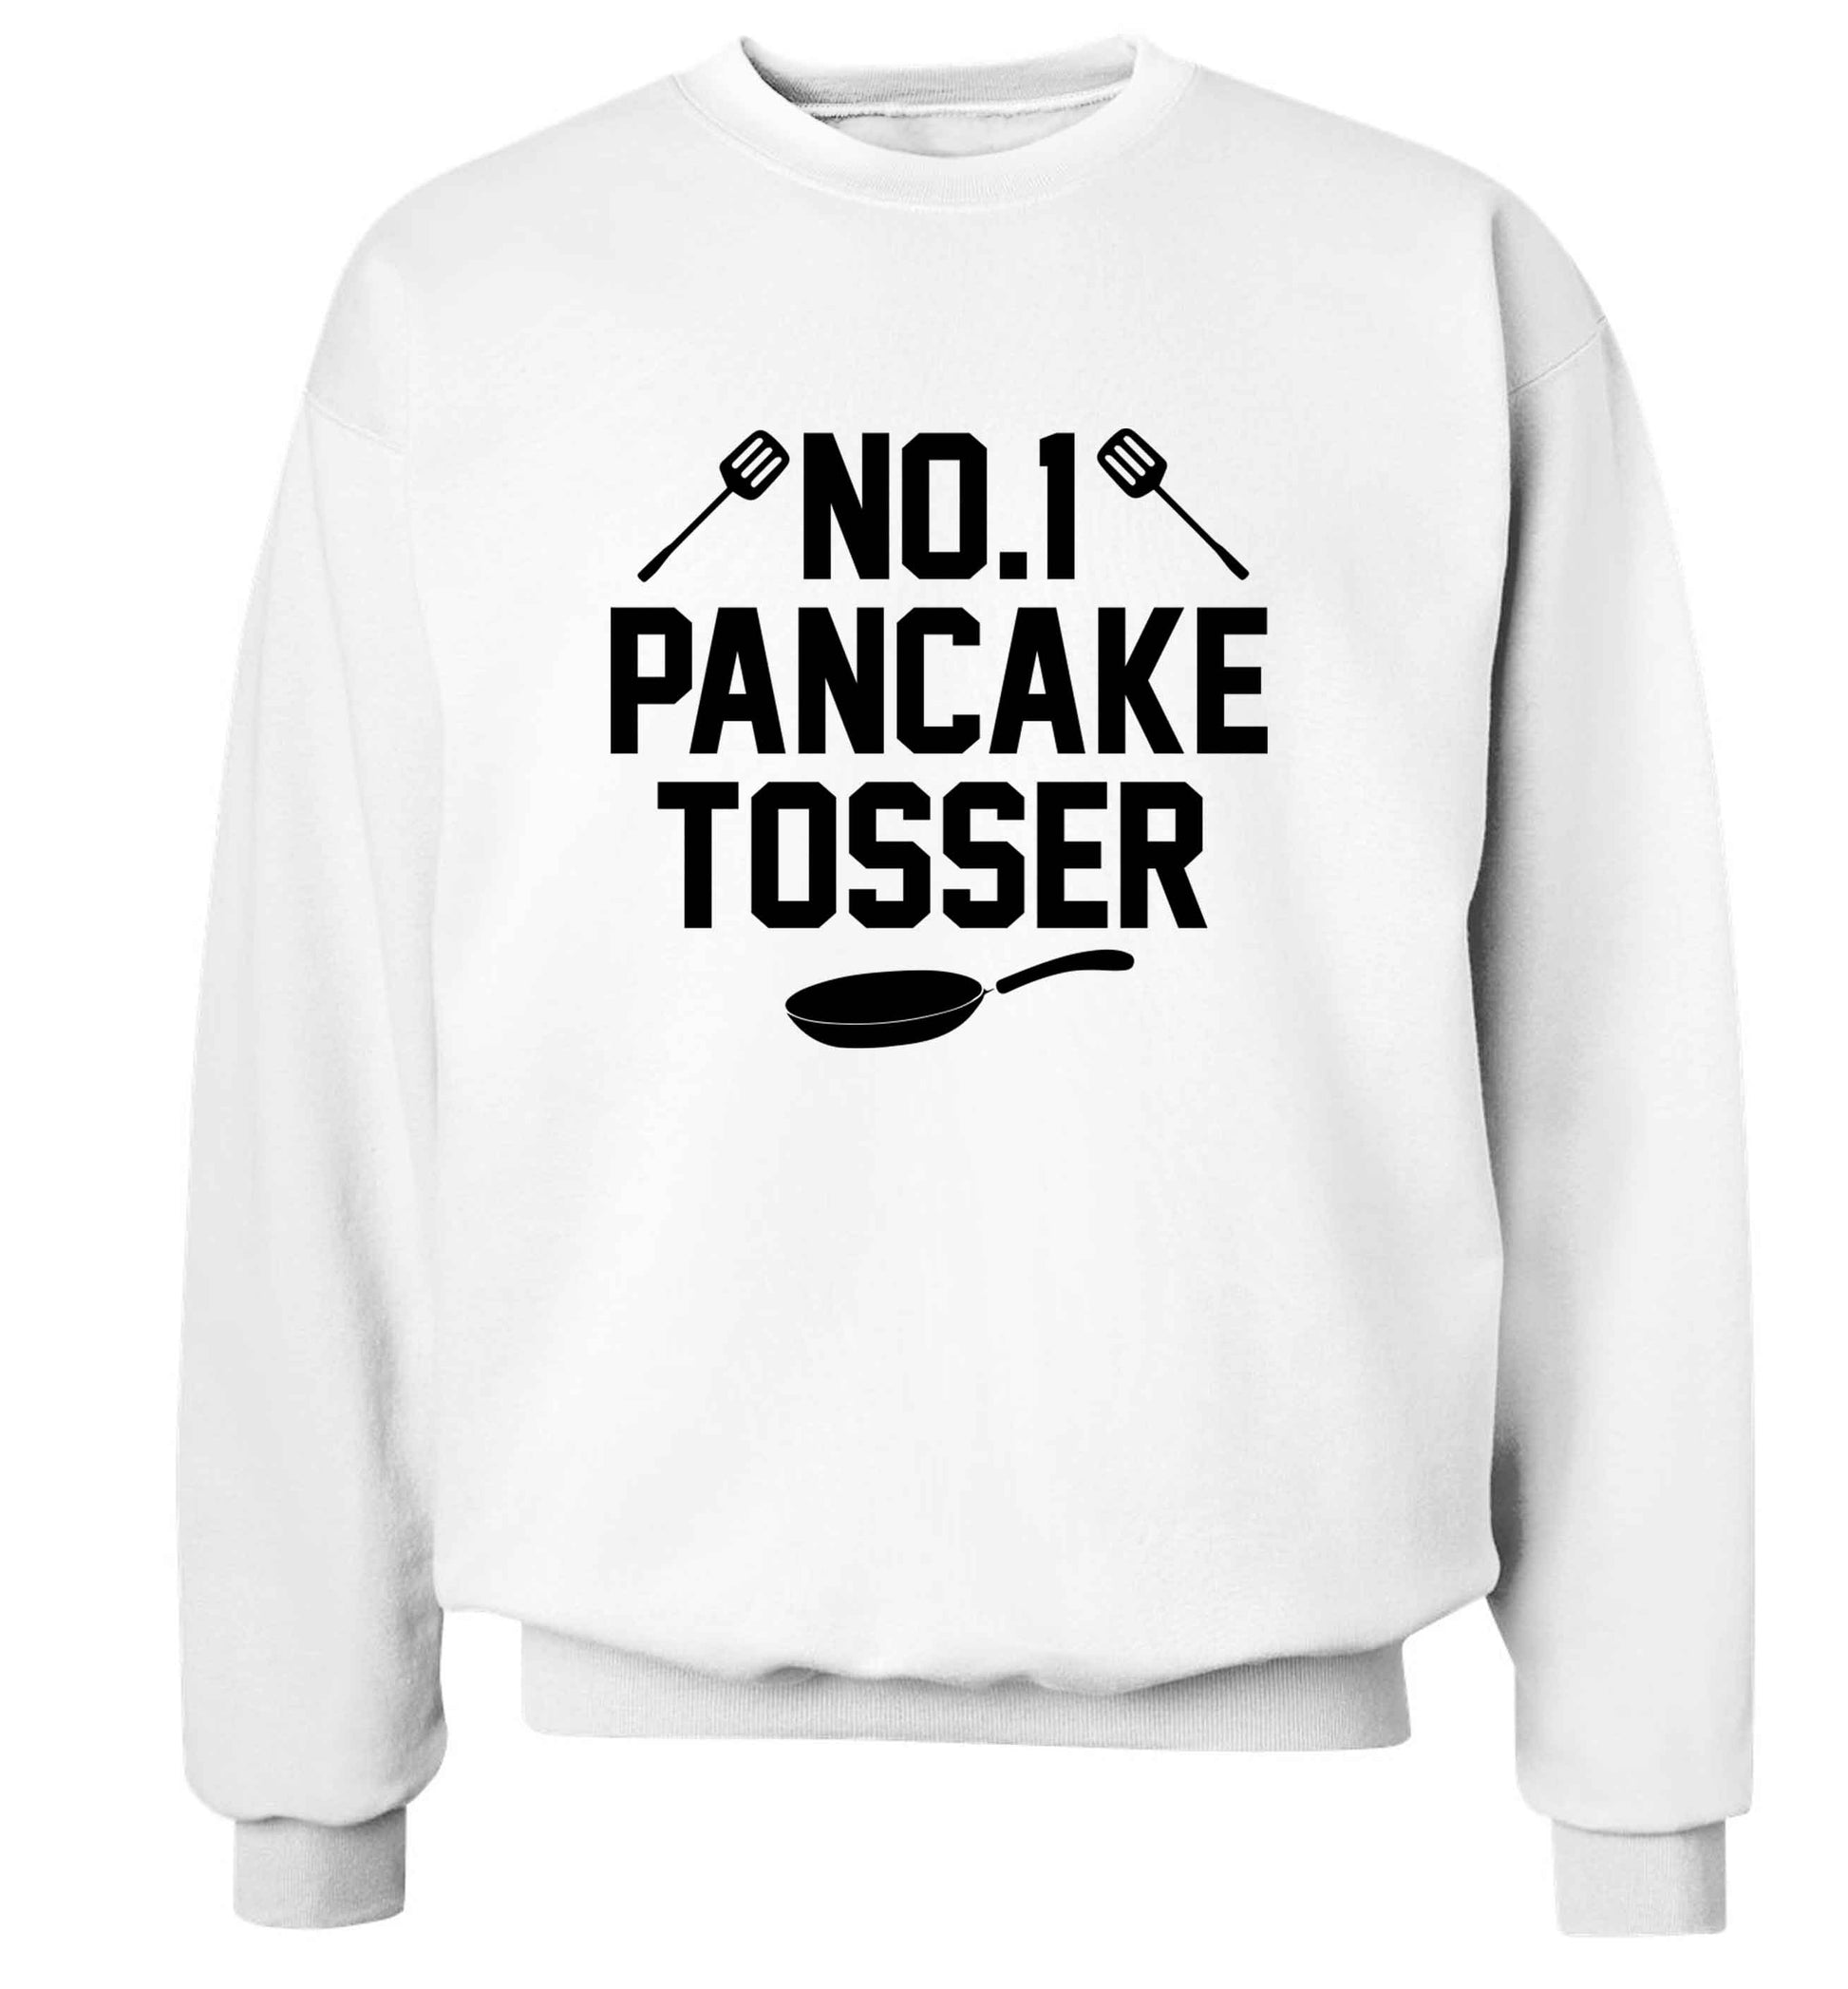 No.1 Pancake tosser adult's unisex white sweater 2XL